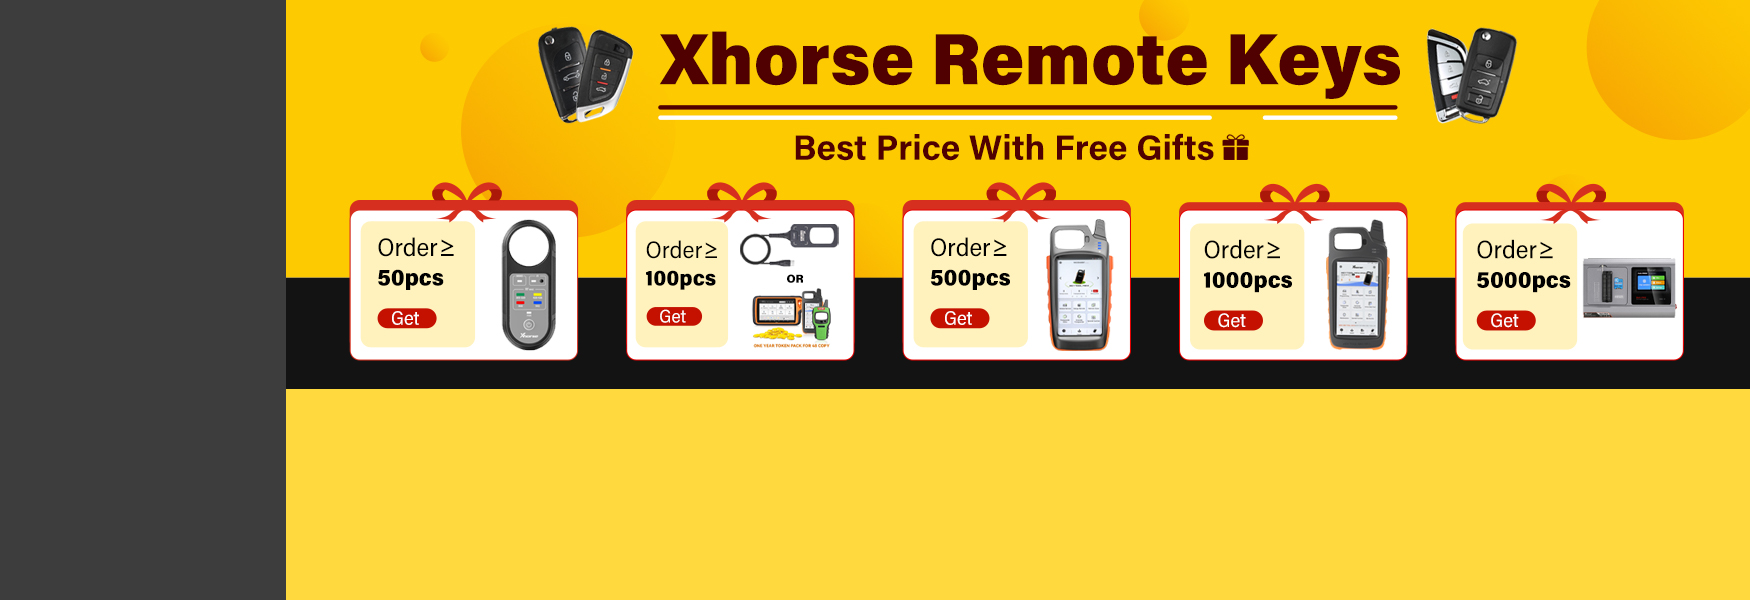 xhorse remote keys promotion price